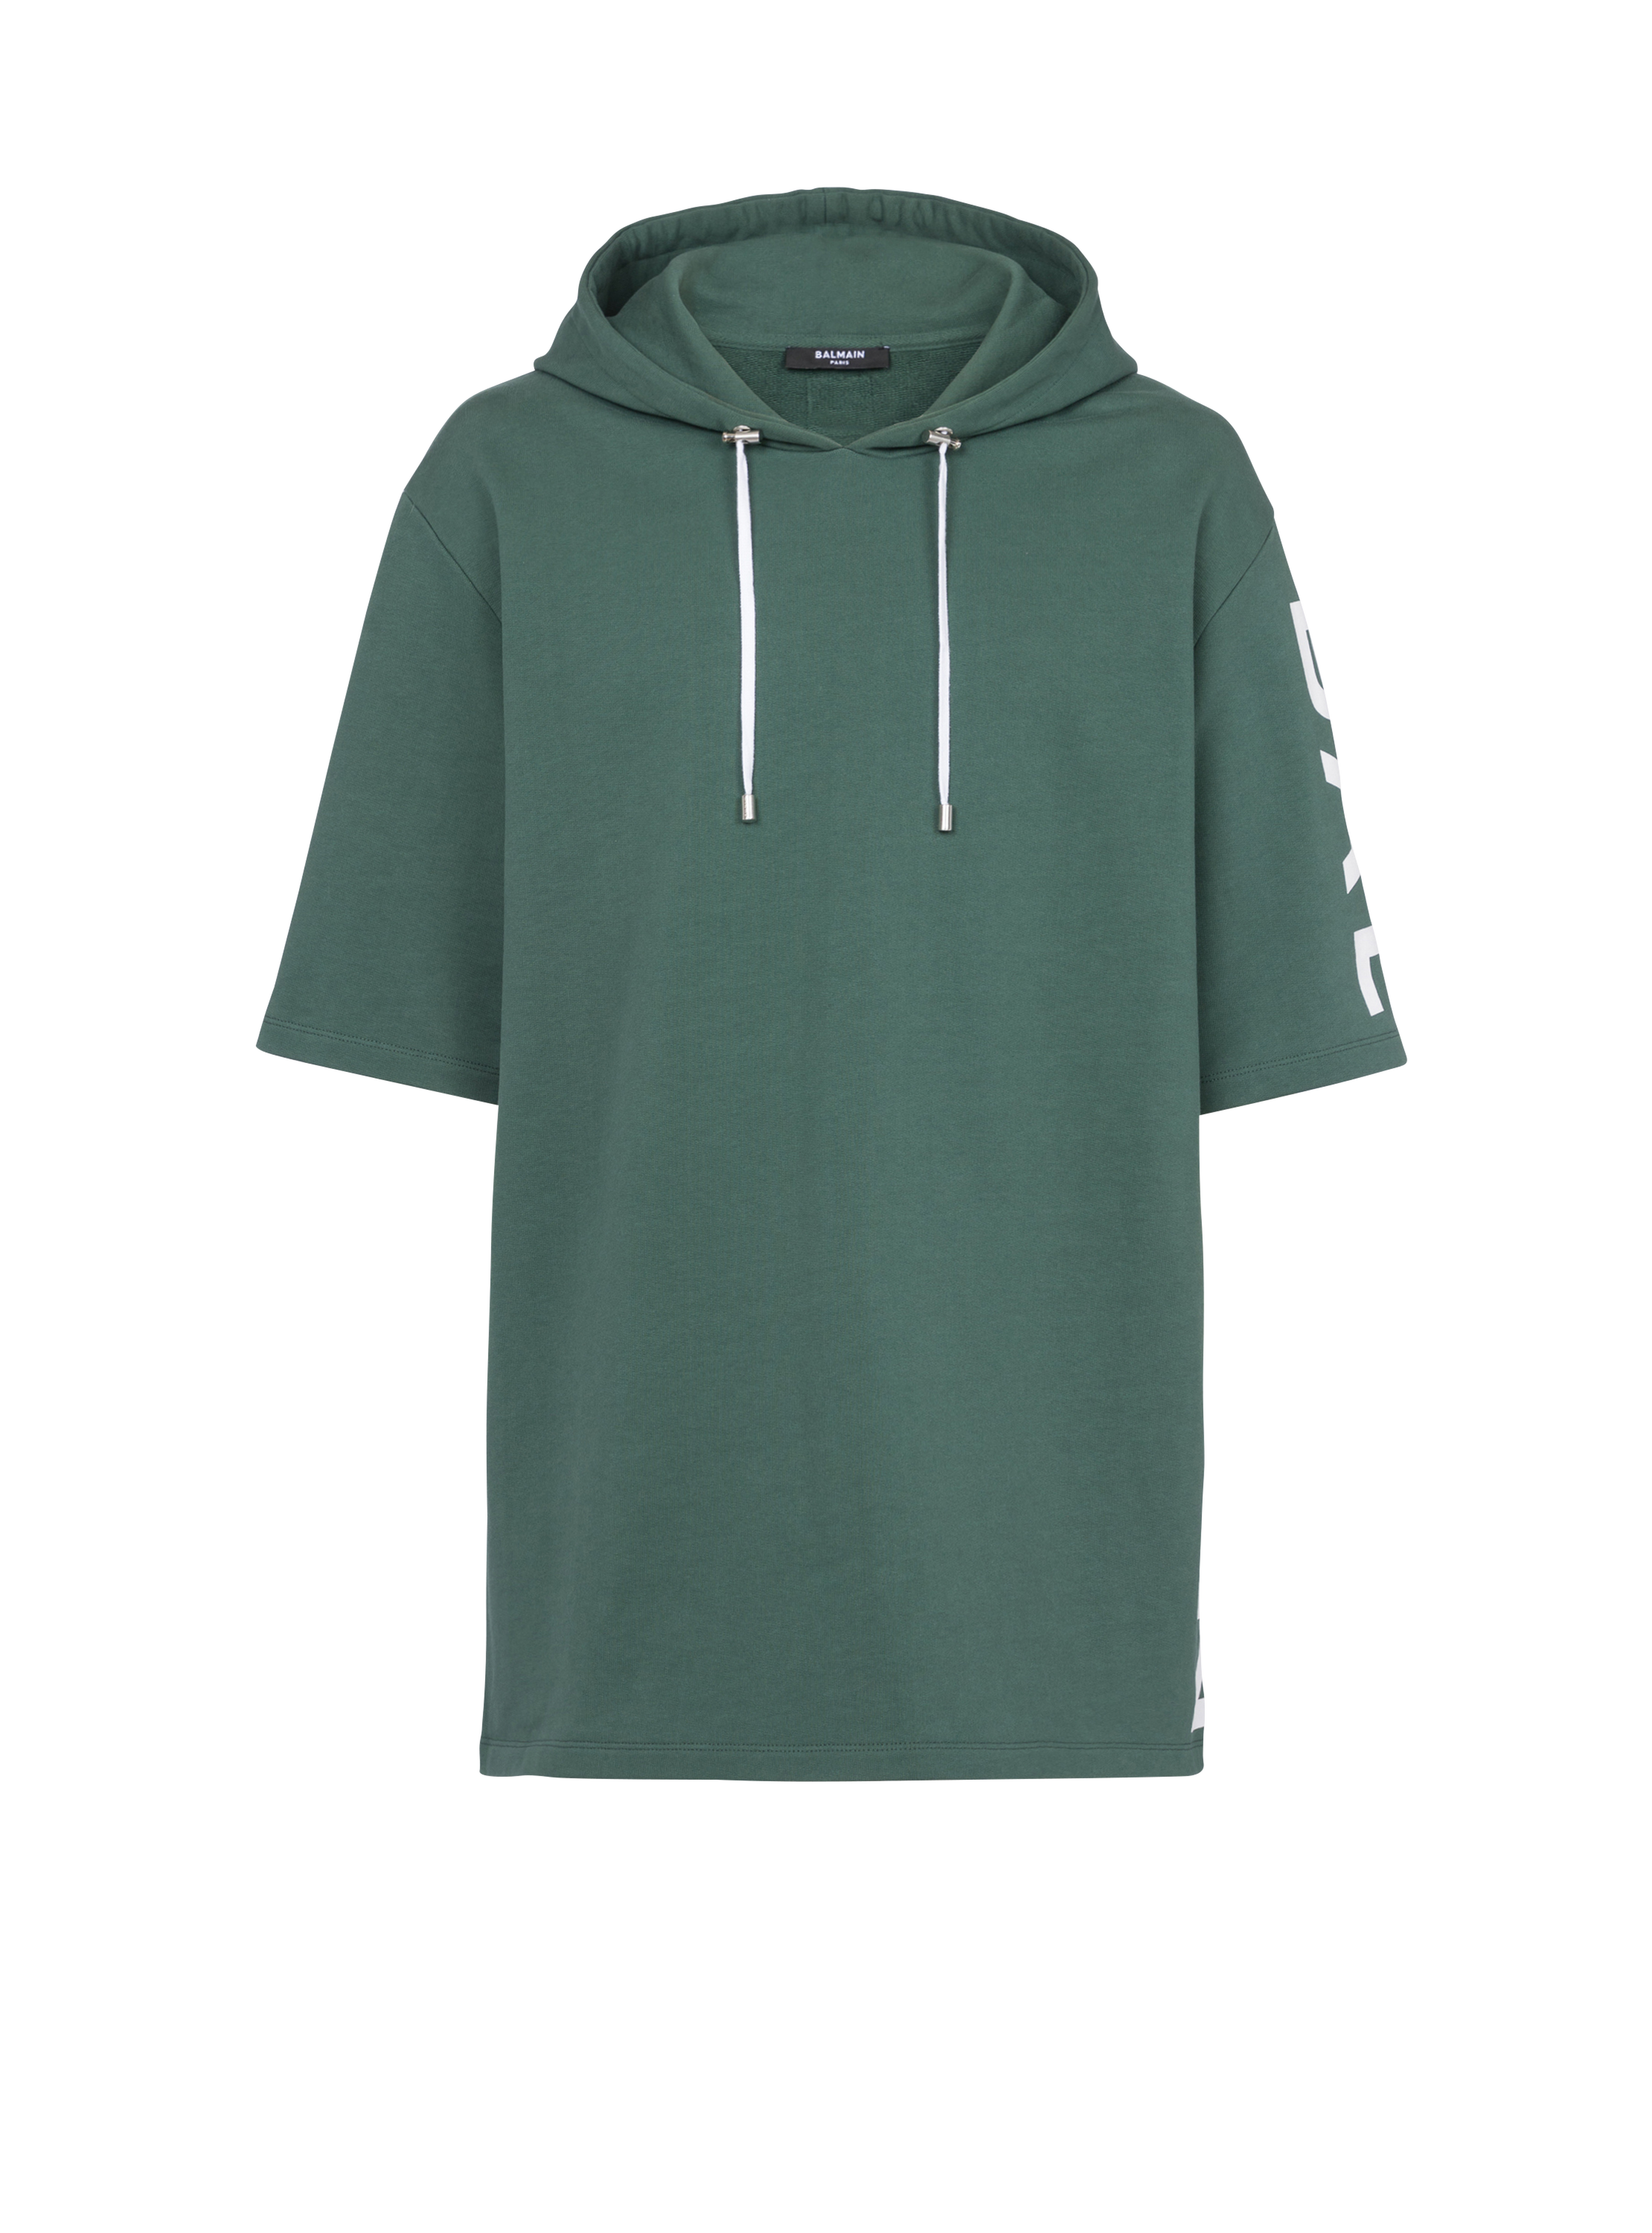 Oversized eco-designed cotton hooded sweatshirt with Balmain logo print, green